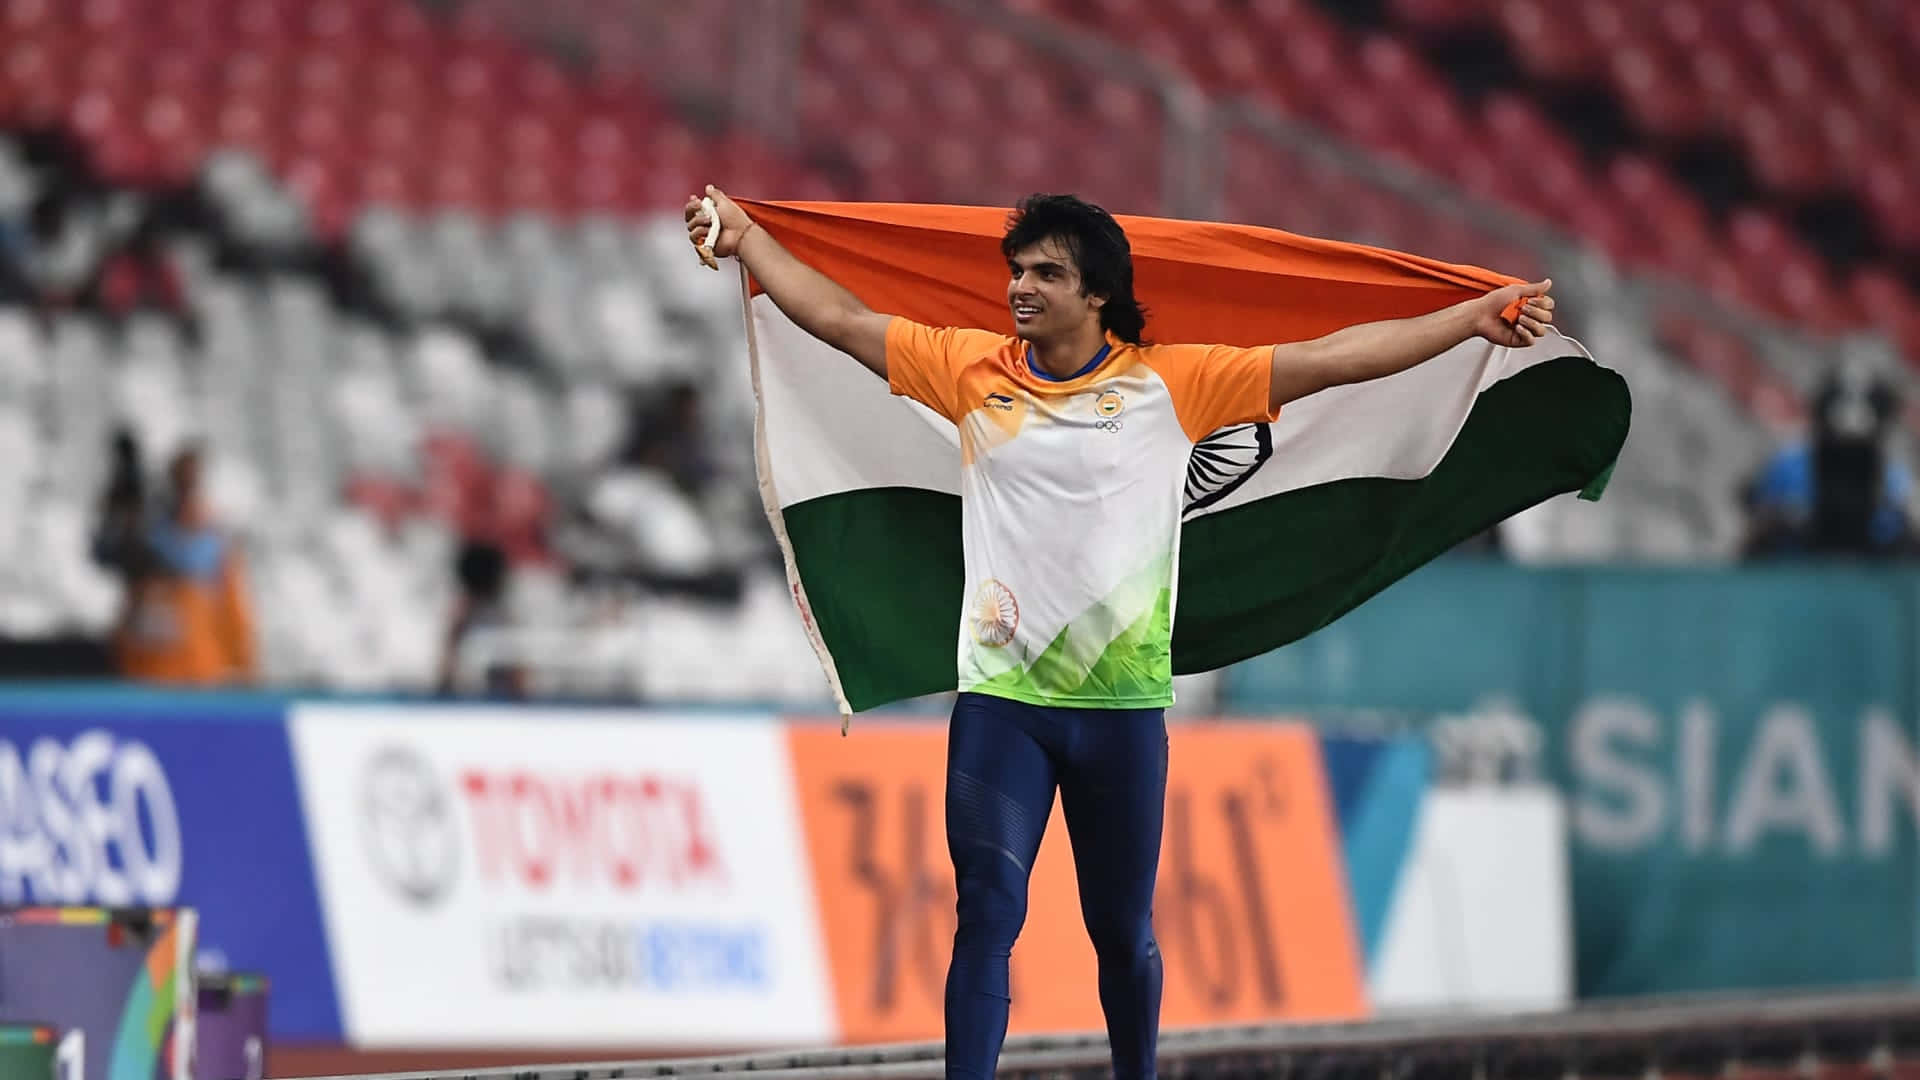 Indian javelin thrower and 2018 Asian Games gold medalist, Neeraj Chopra